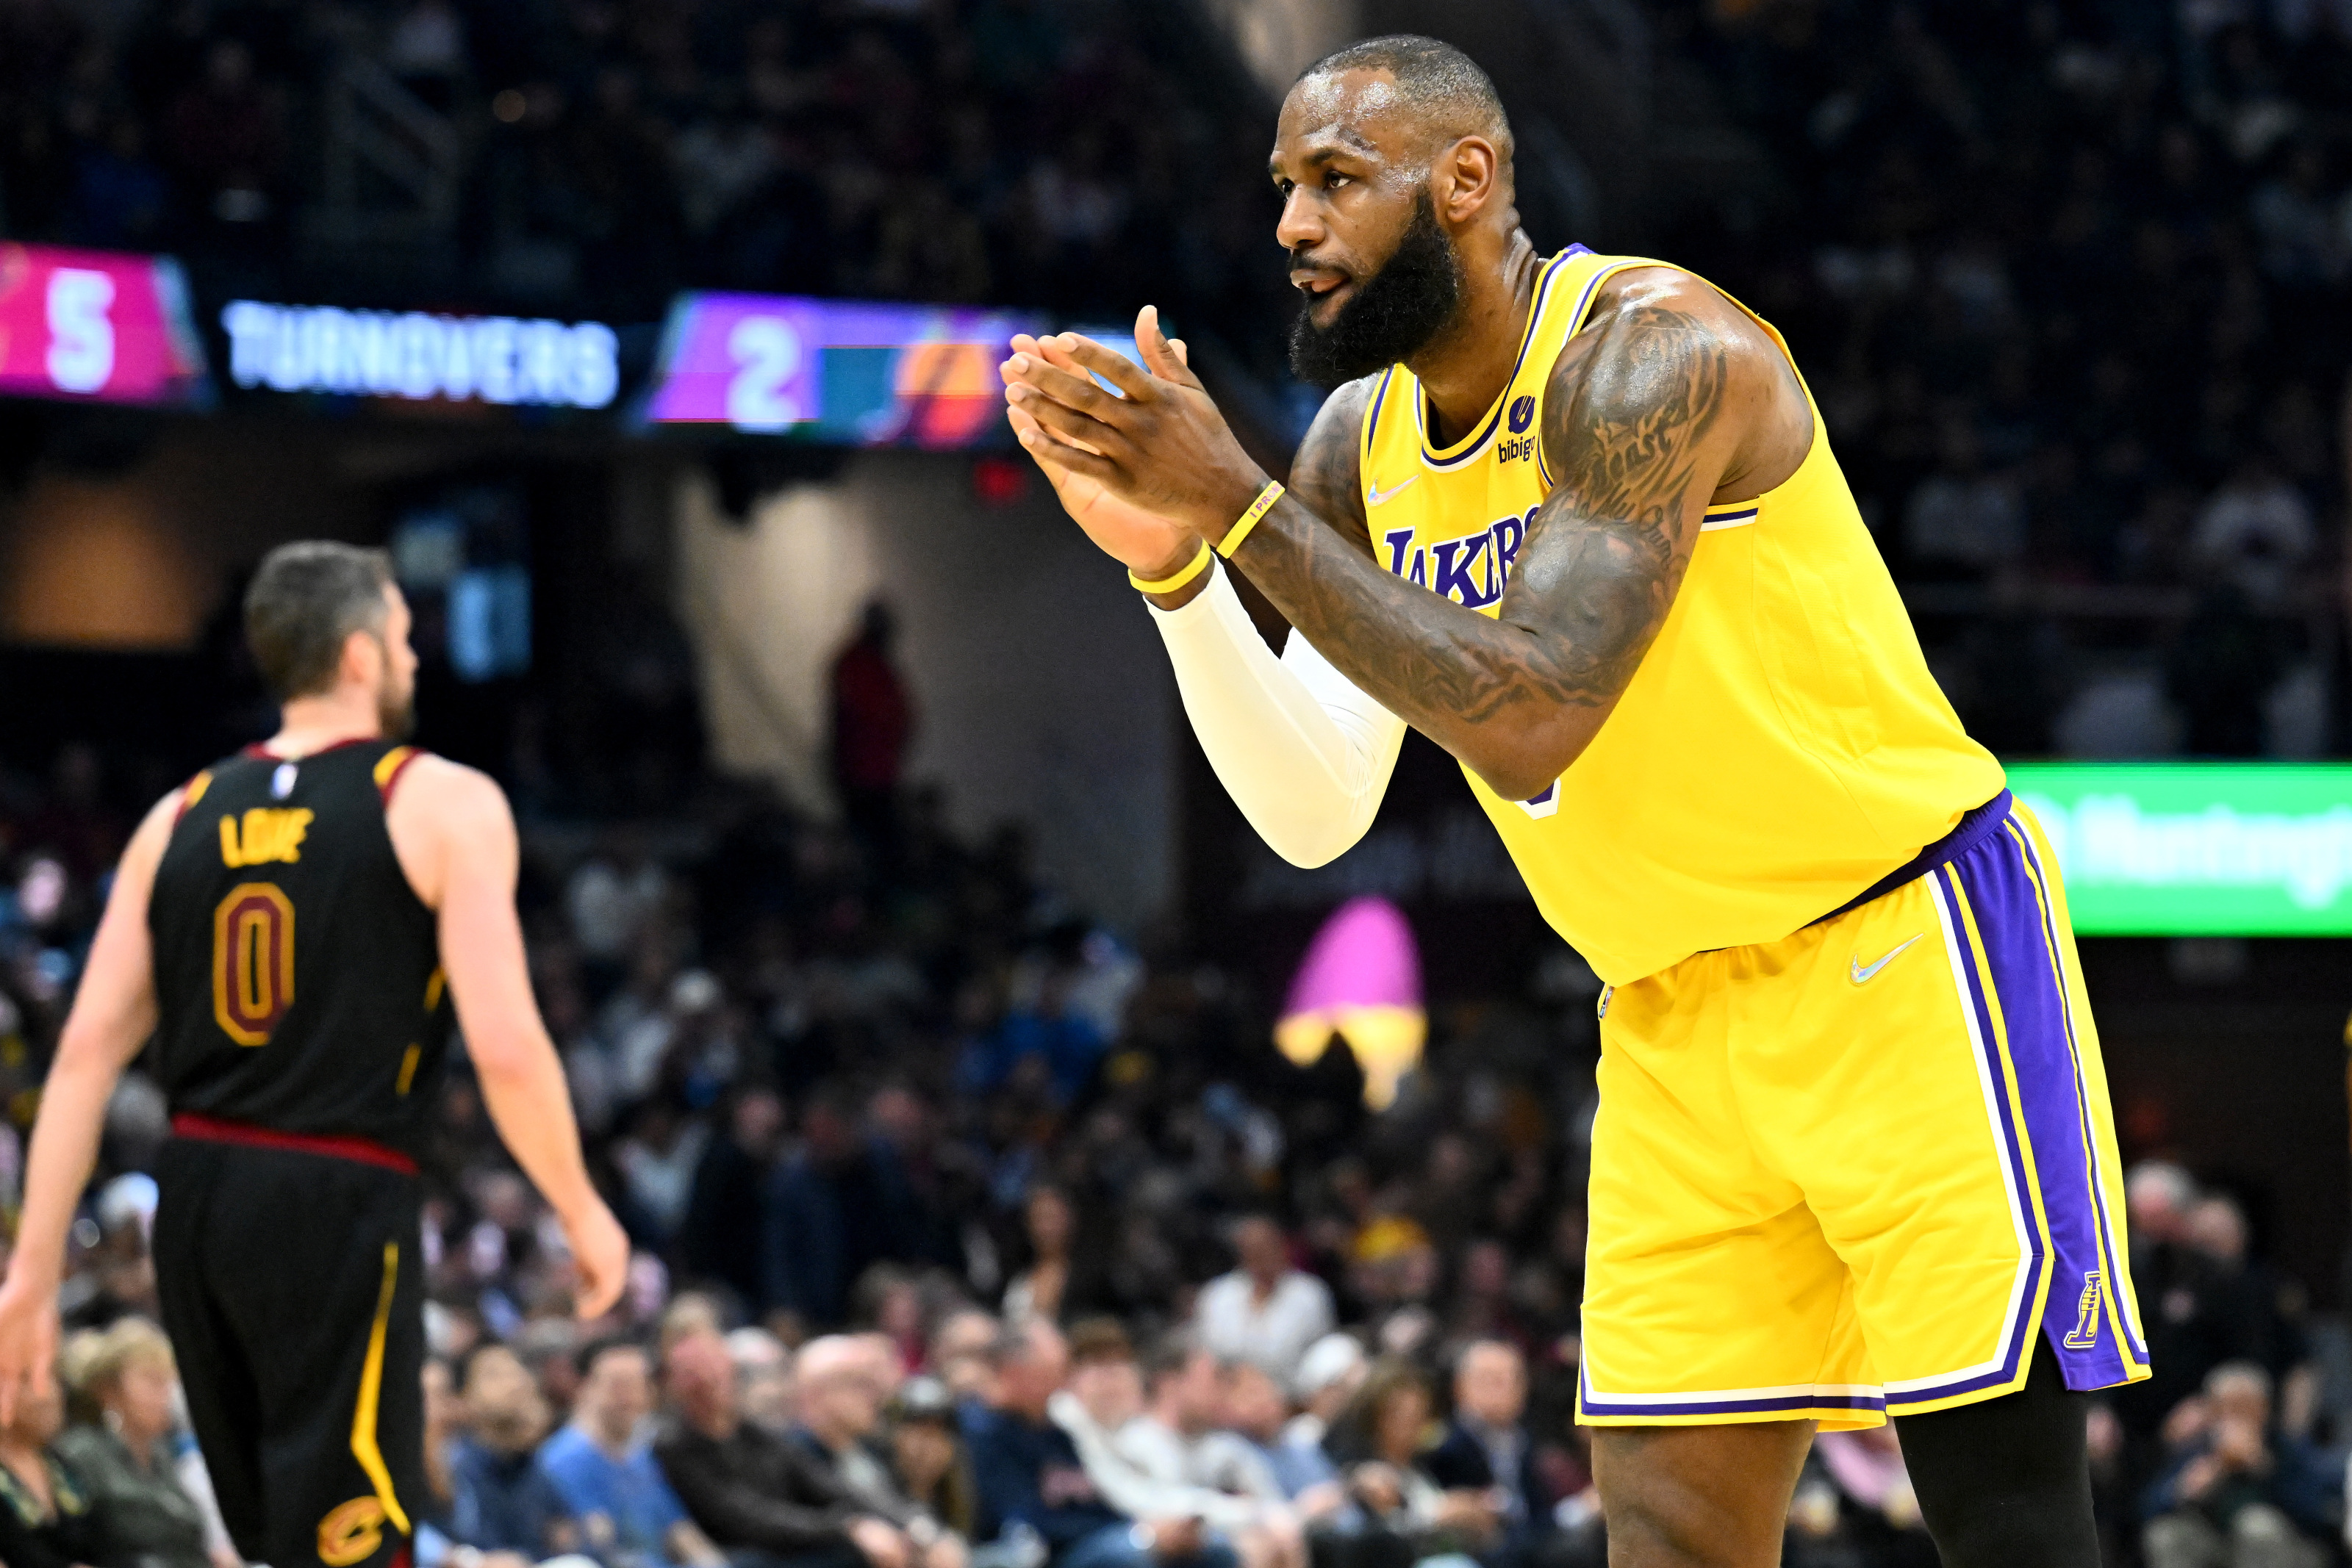 Photos: Lakers vs Cavaliers (10/29/21) Photo Gallery